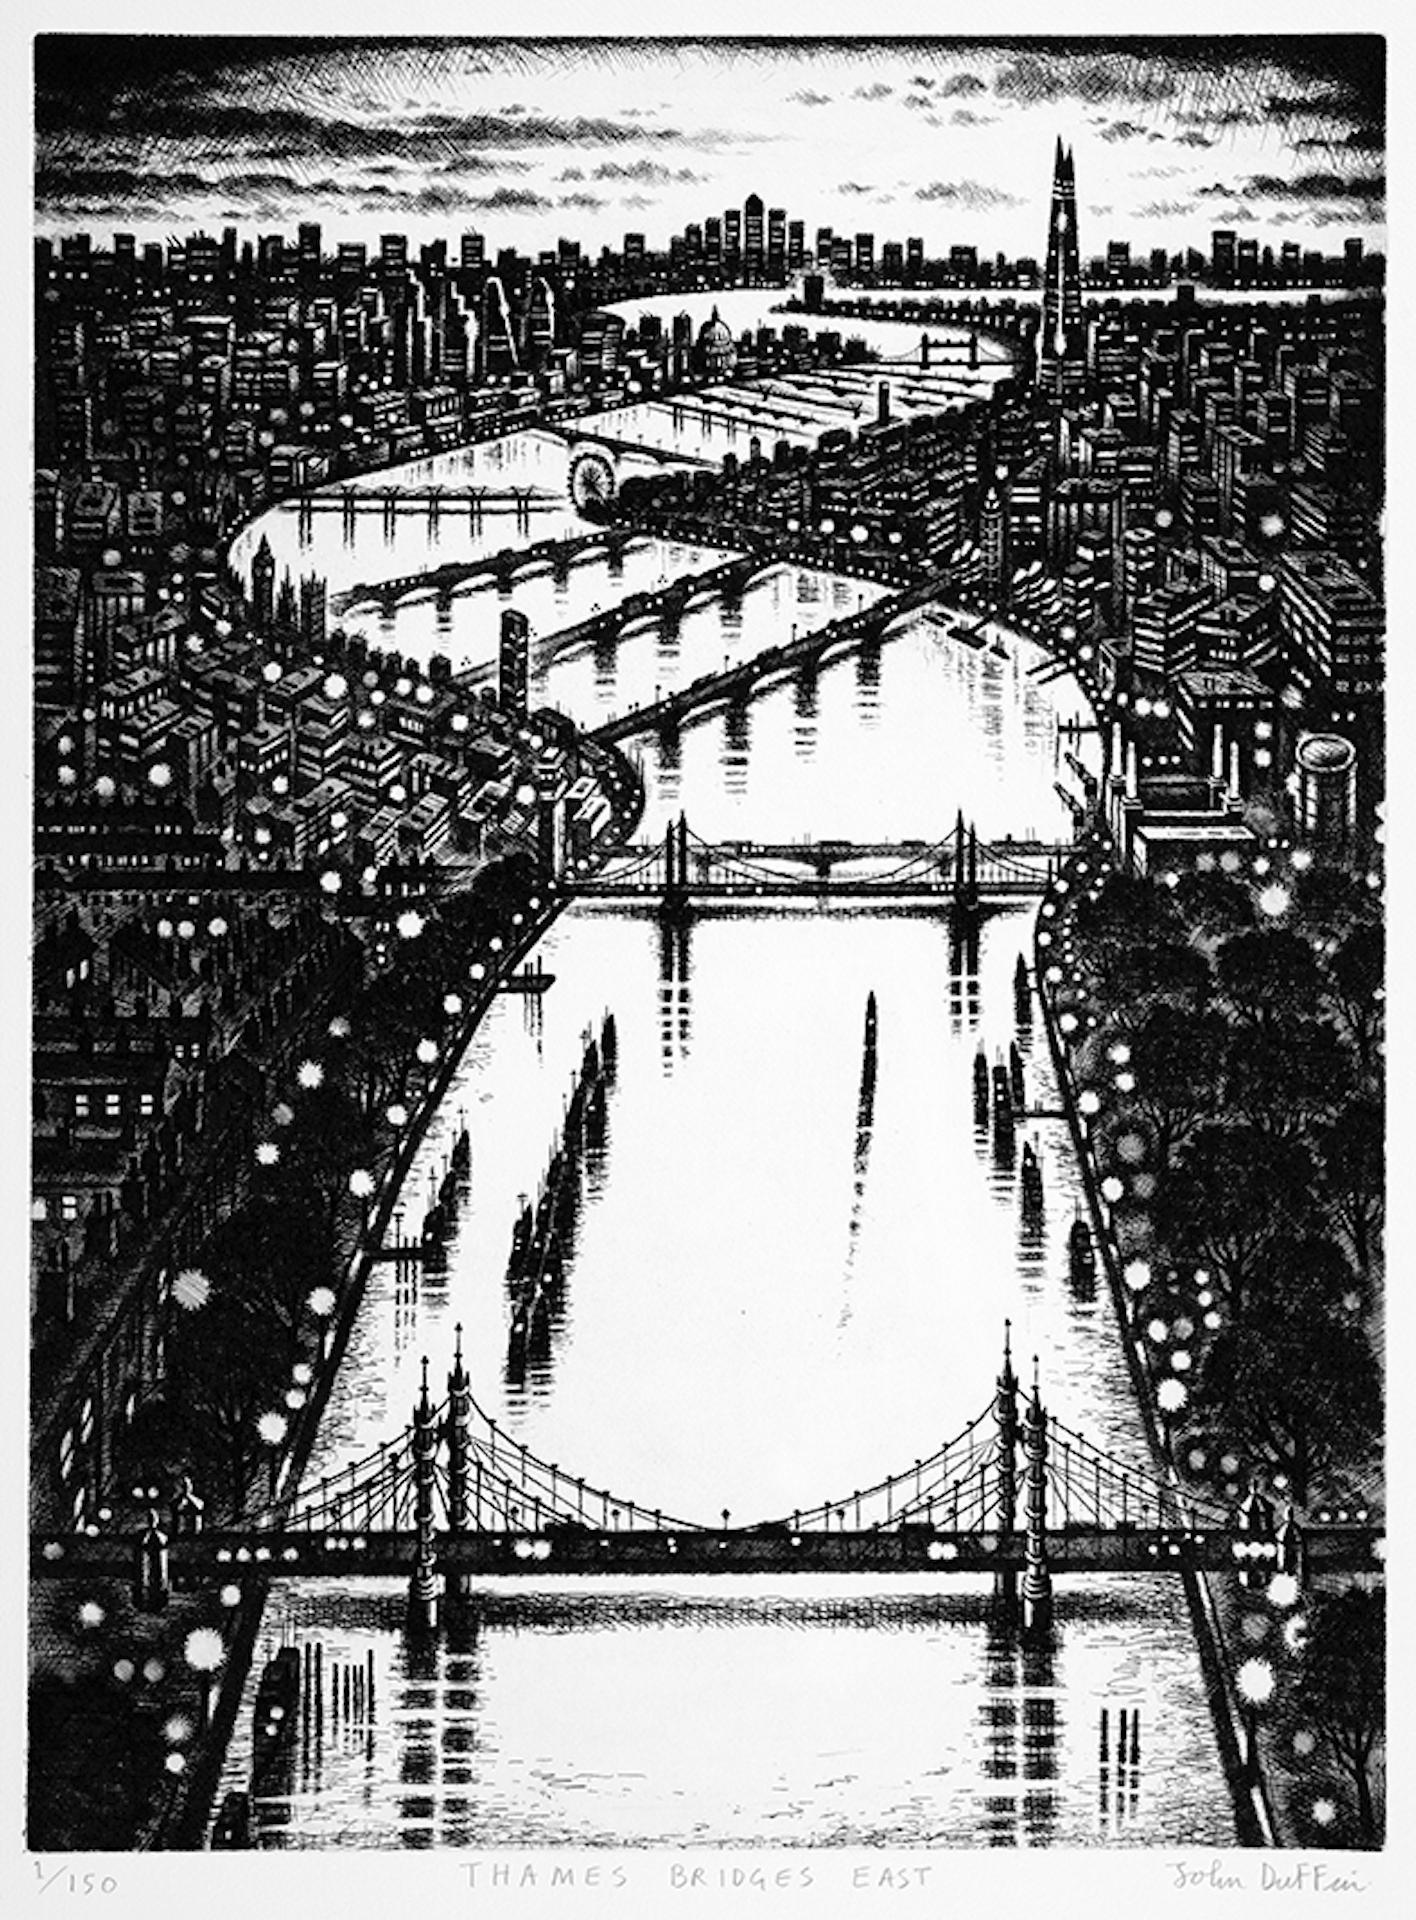 John Duffin Abstract Print - Thames Bridge East, London Cityscape Prints, Original Monochromatic Artwork